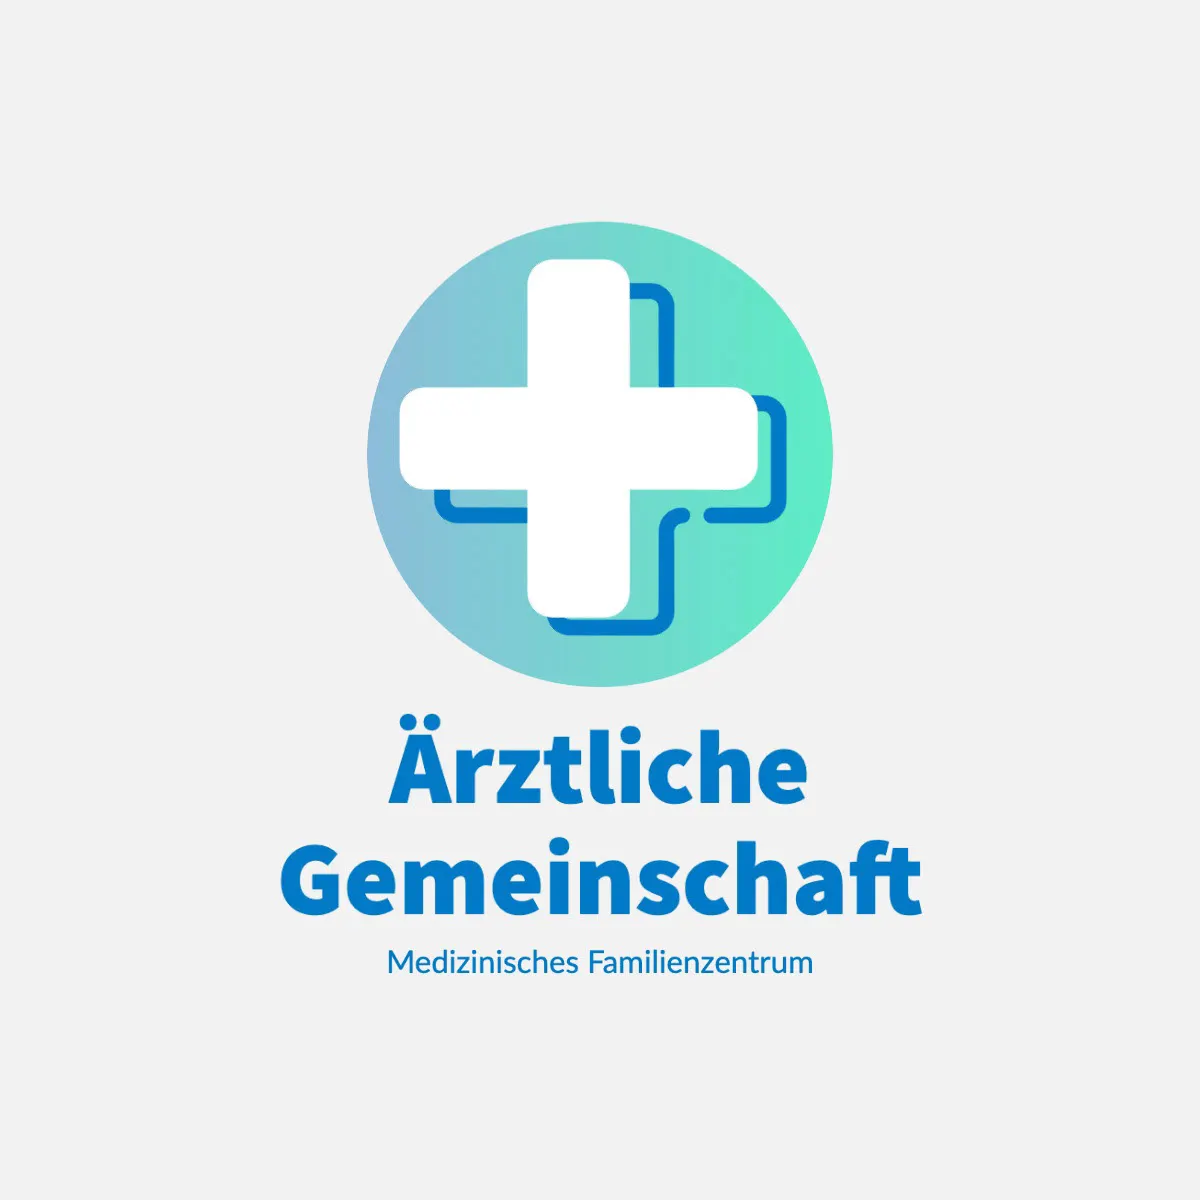 Green & Blue Gradient Medical Logo